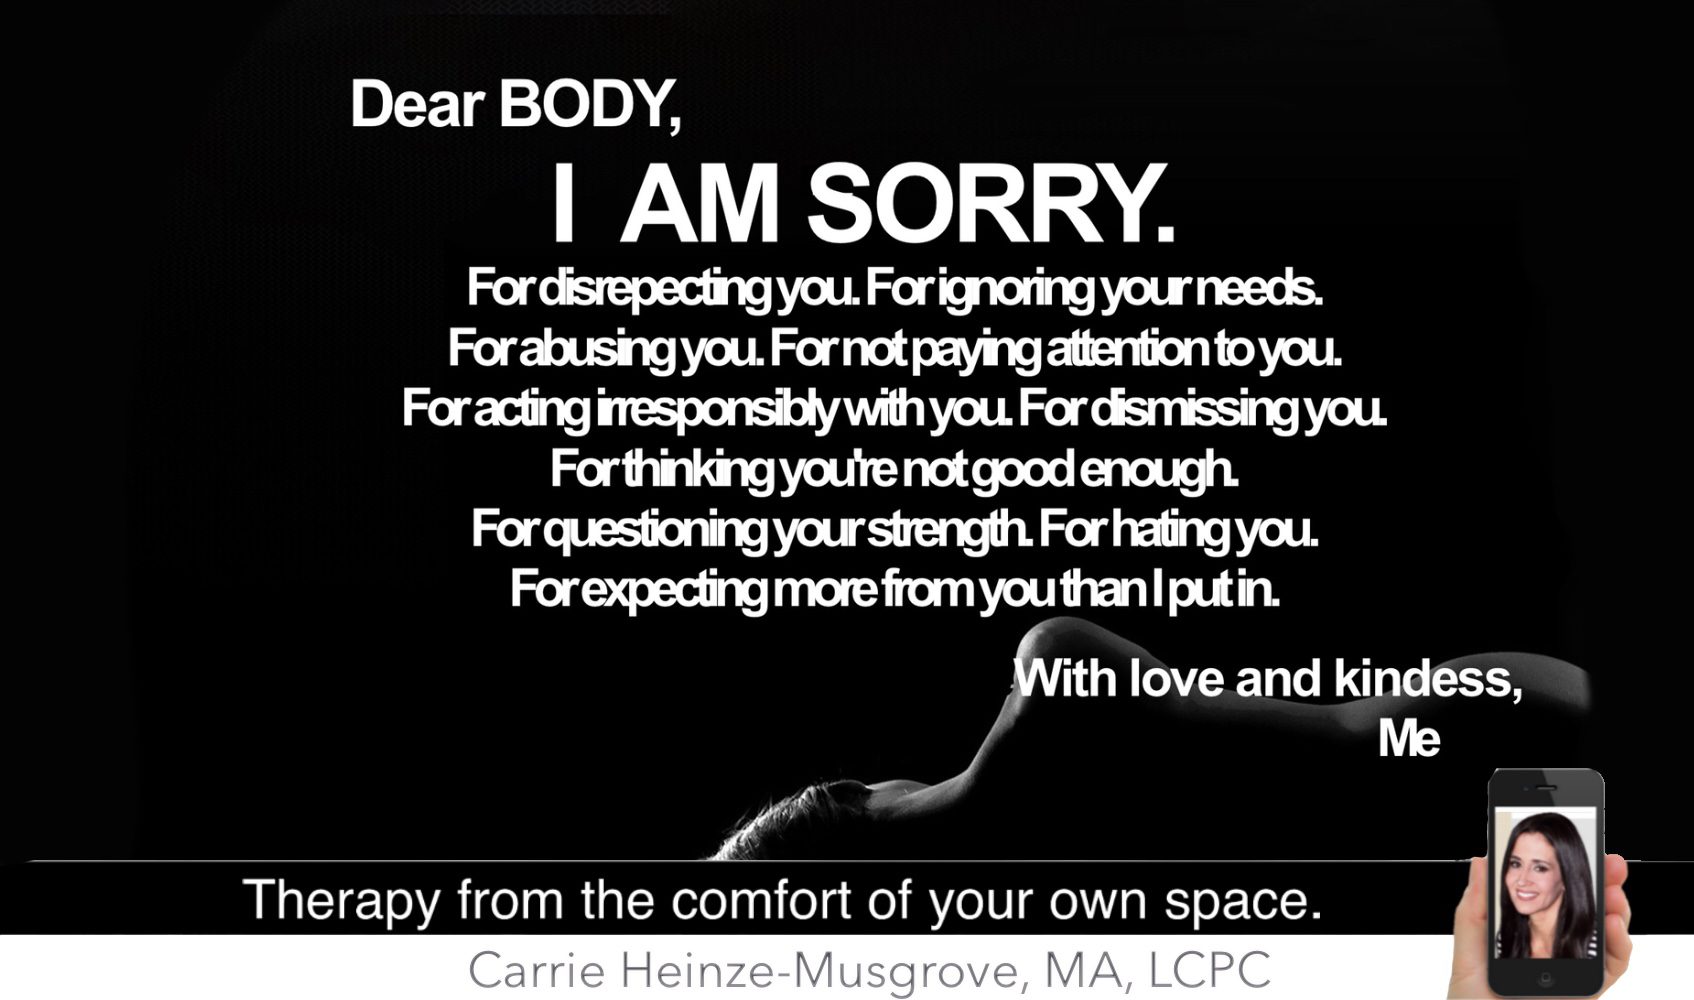 Dear Body,